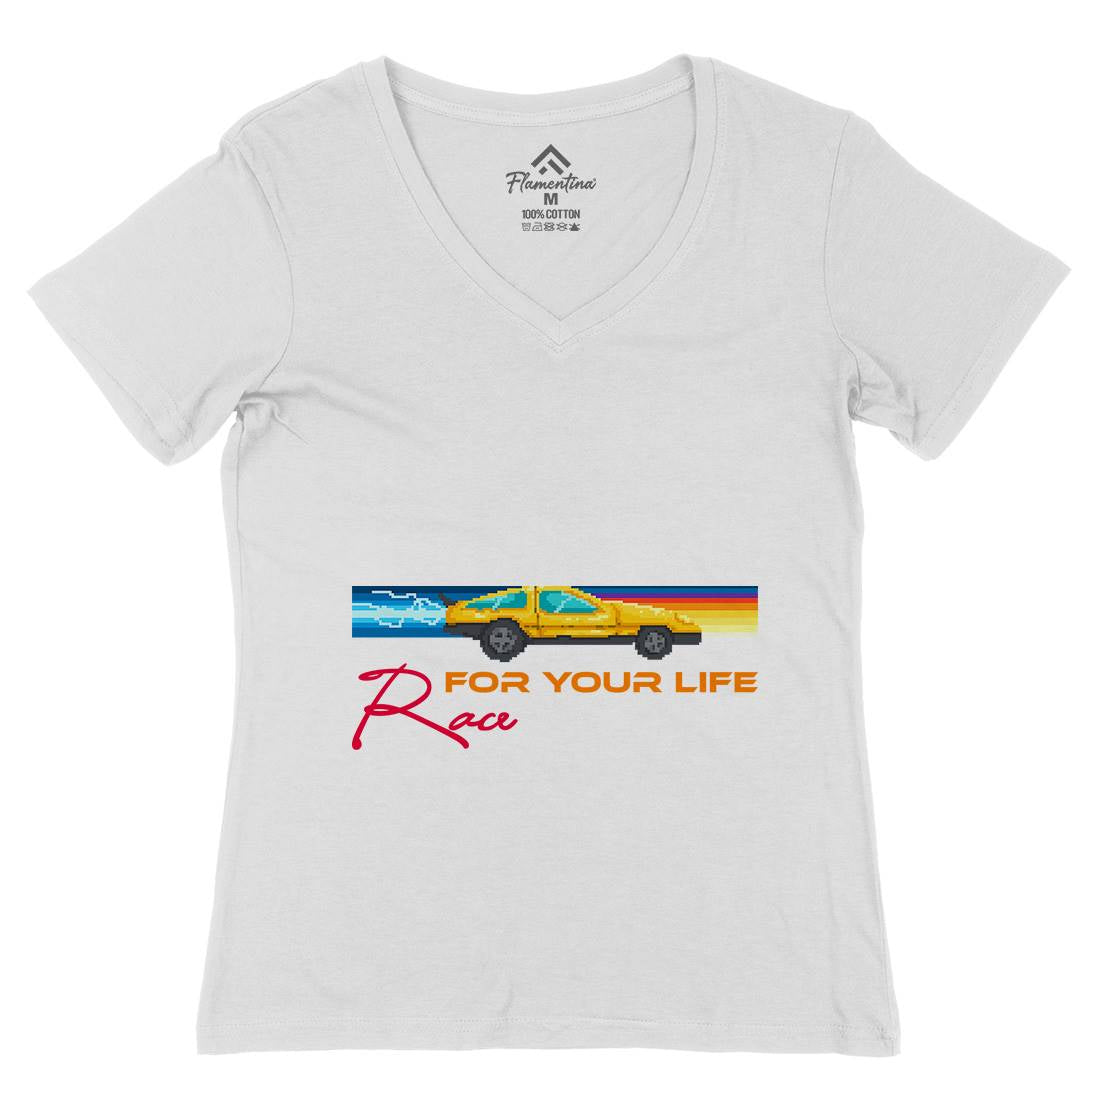 Race For Your Life Womens Organic V-Neck T-Shirt Cars B951